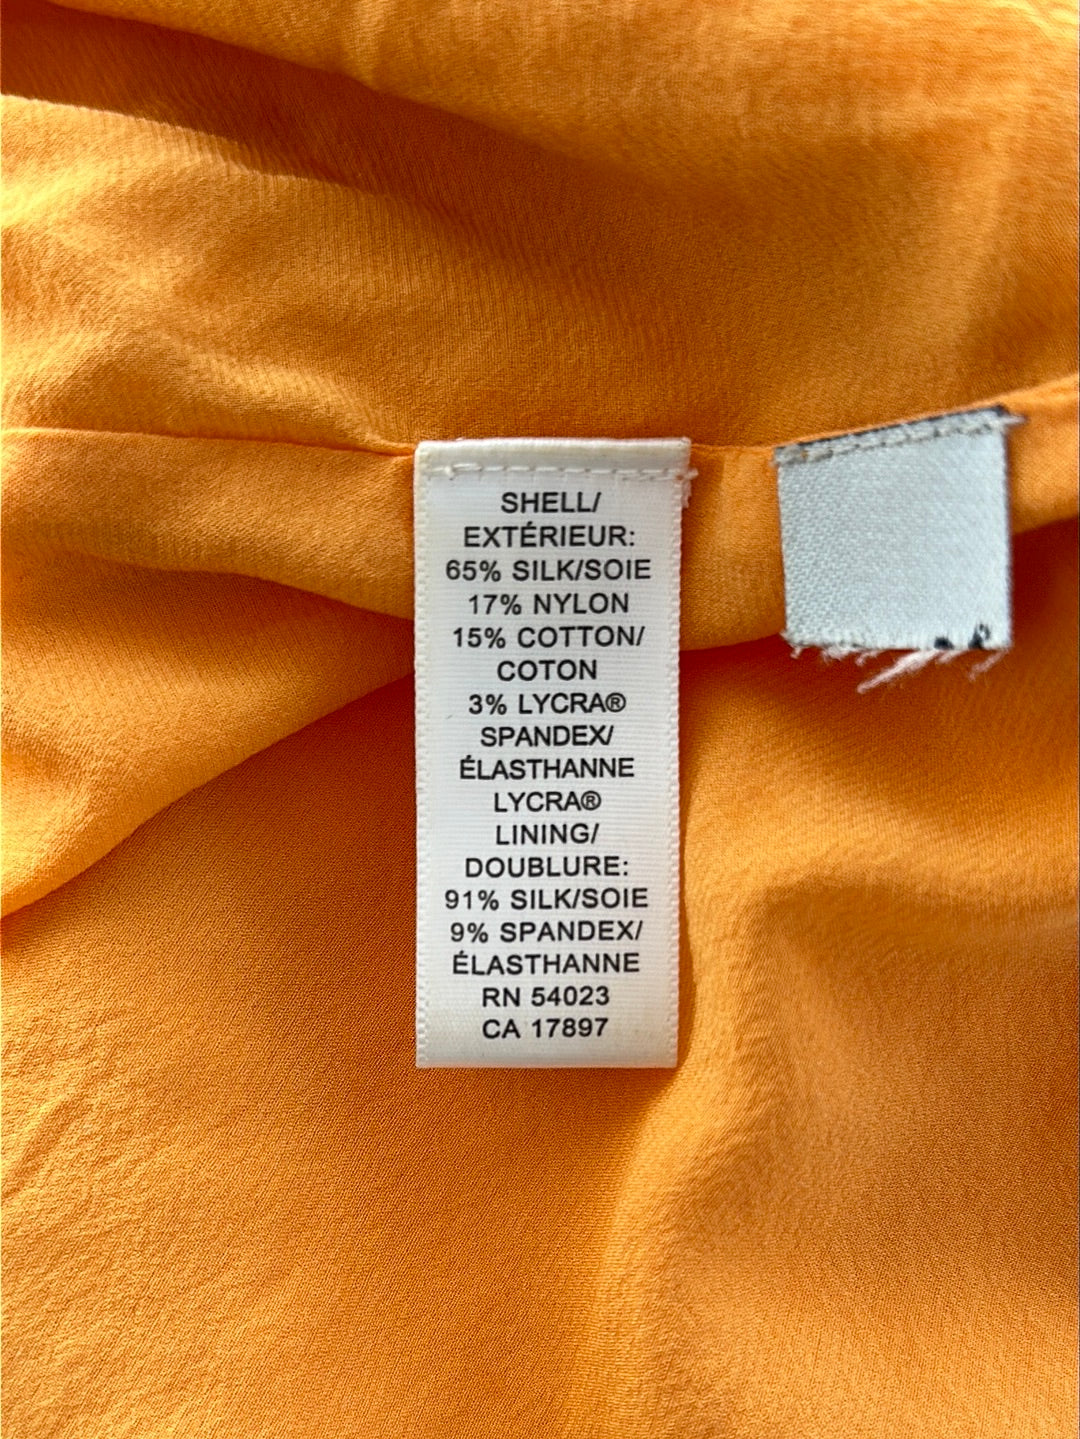 BANANA REPUBLIC orange Silk Blend Iridescent Sequin Beaded Top - M